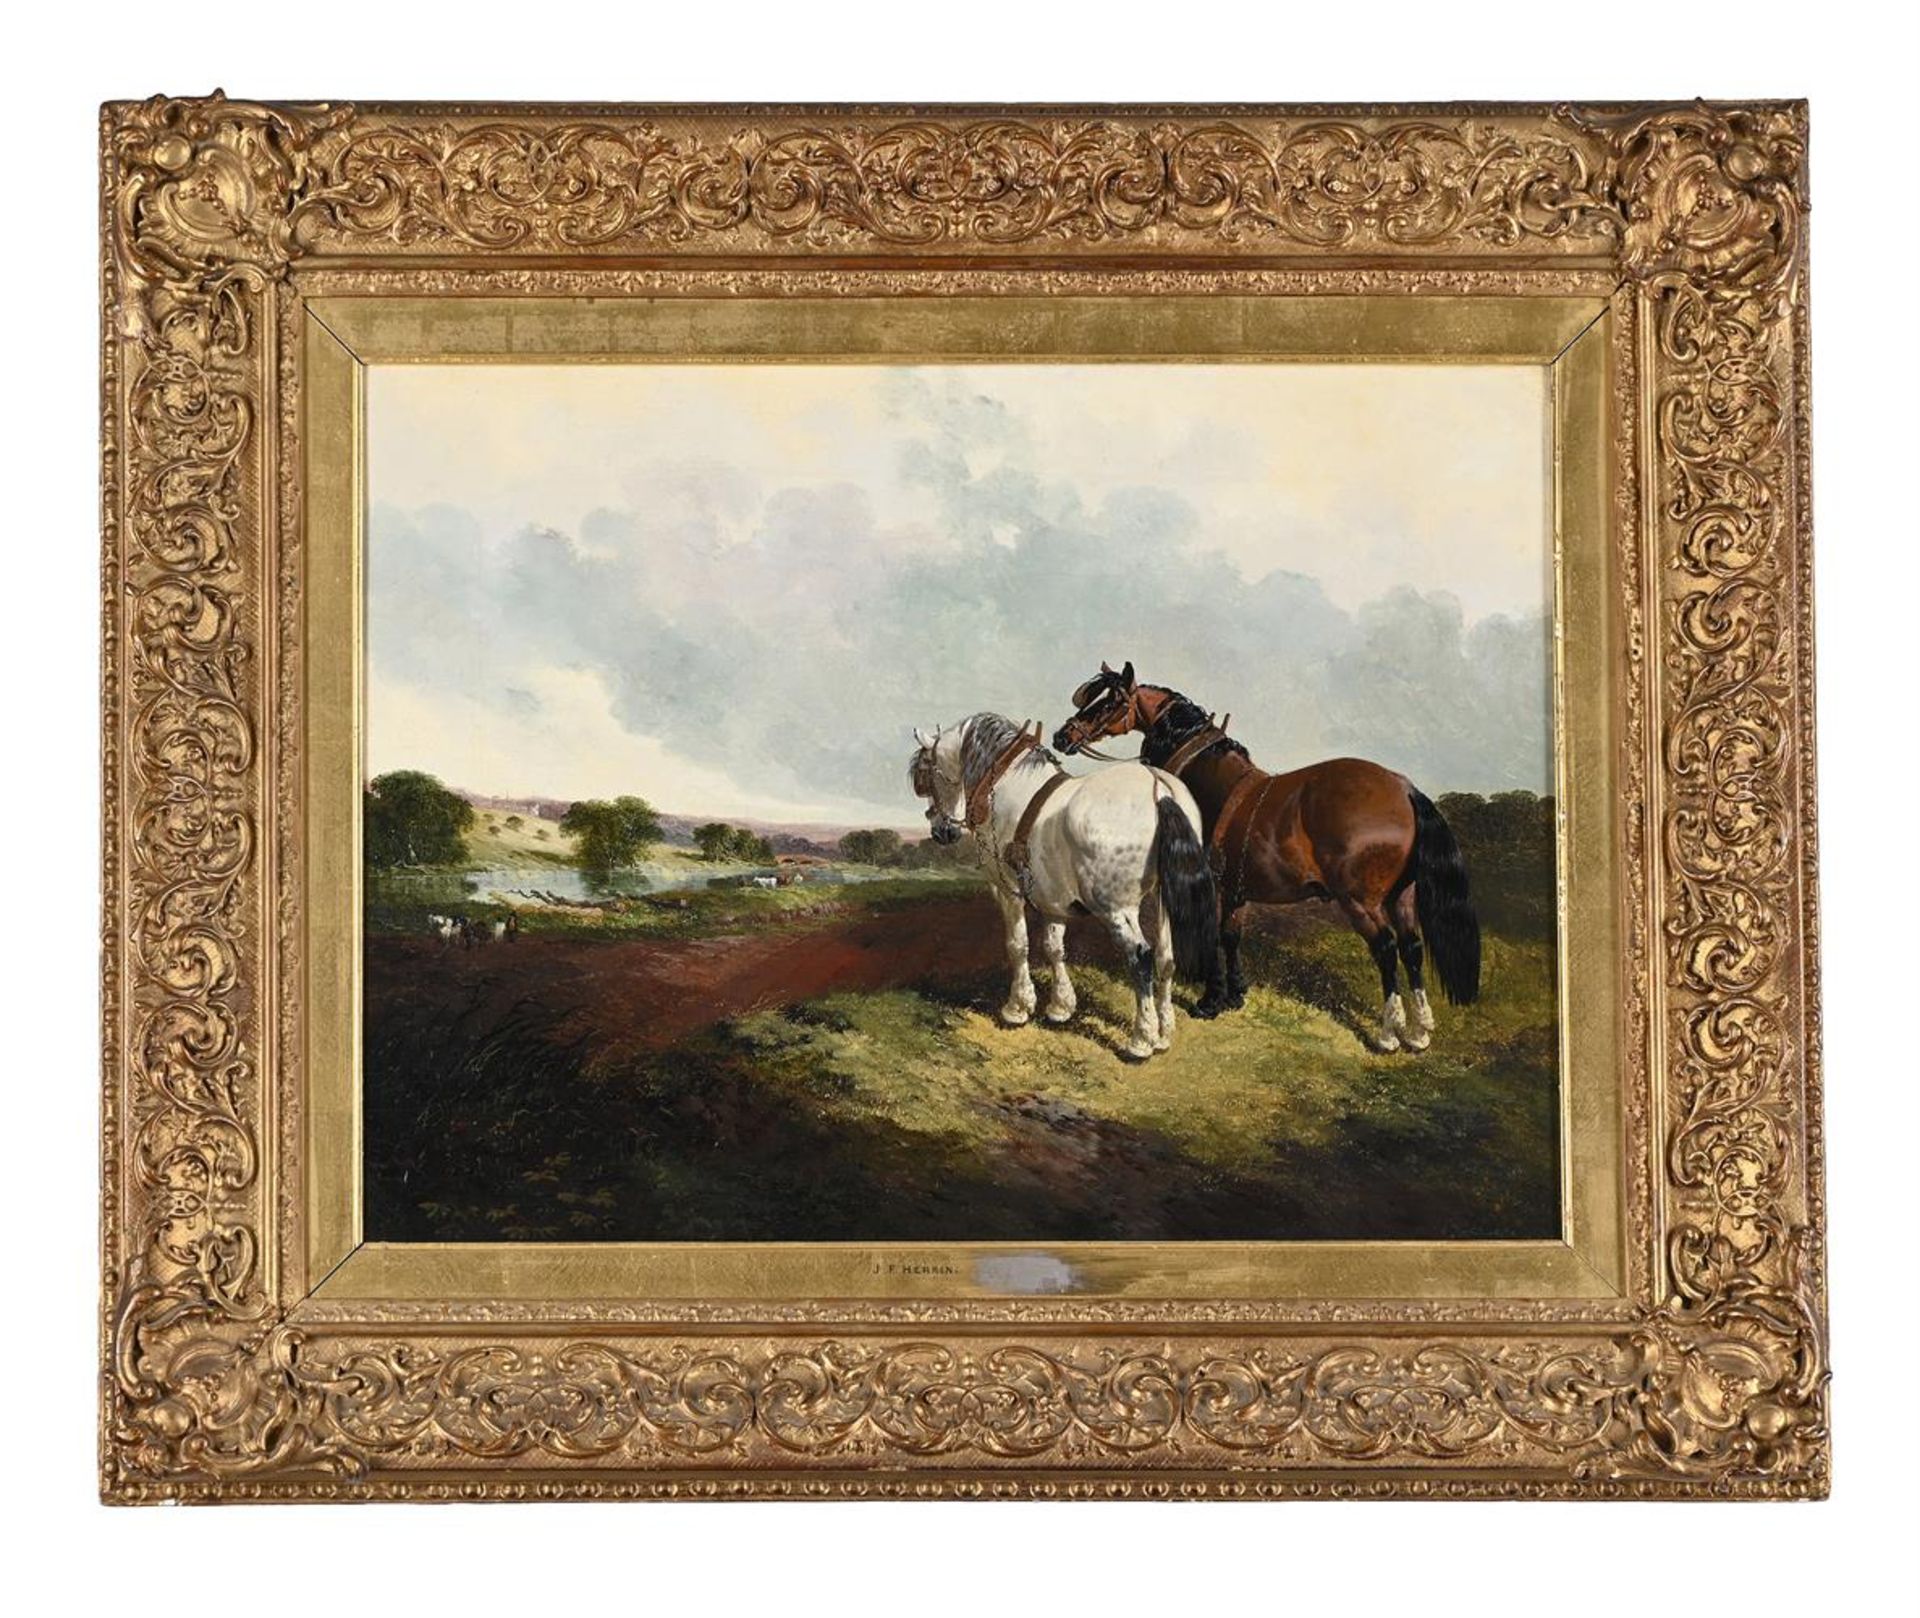 JOHN FREDERICK HERRING JUNIOR (BRITISH 1815-1907), TWO PLOUGH HORSES AT THE EDGE OF A FIELD